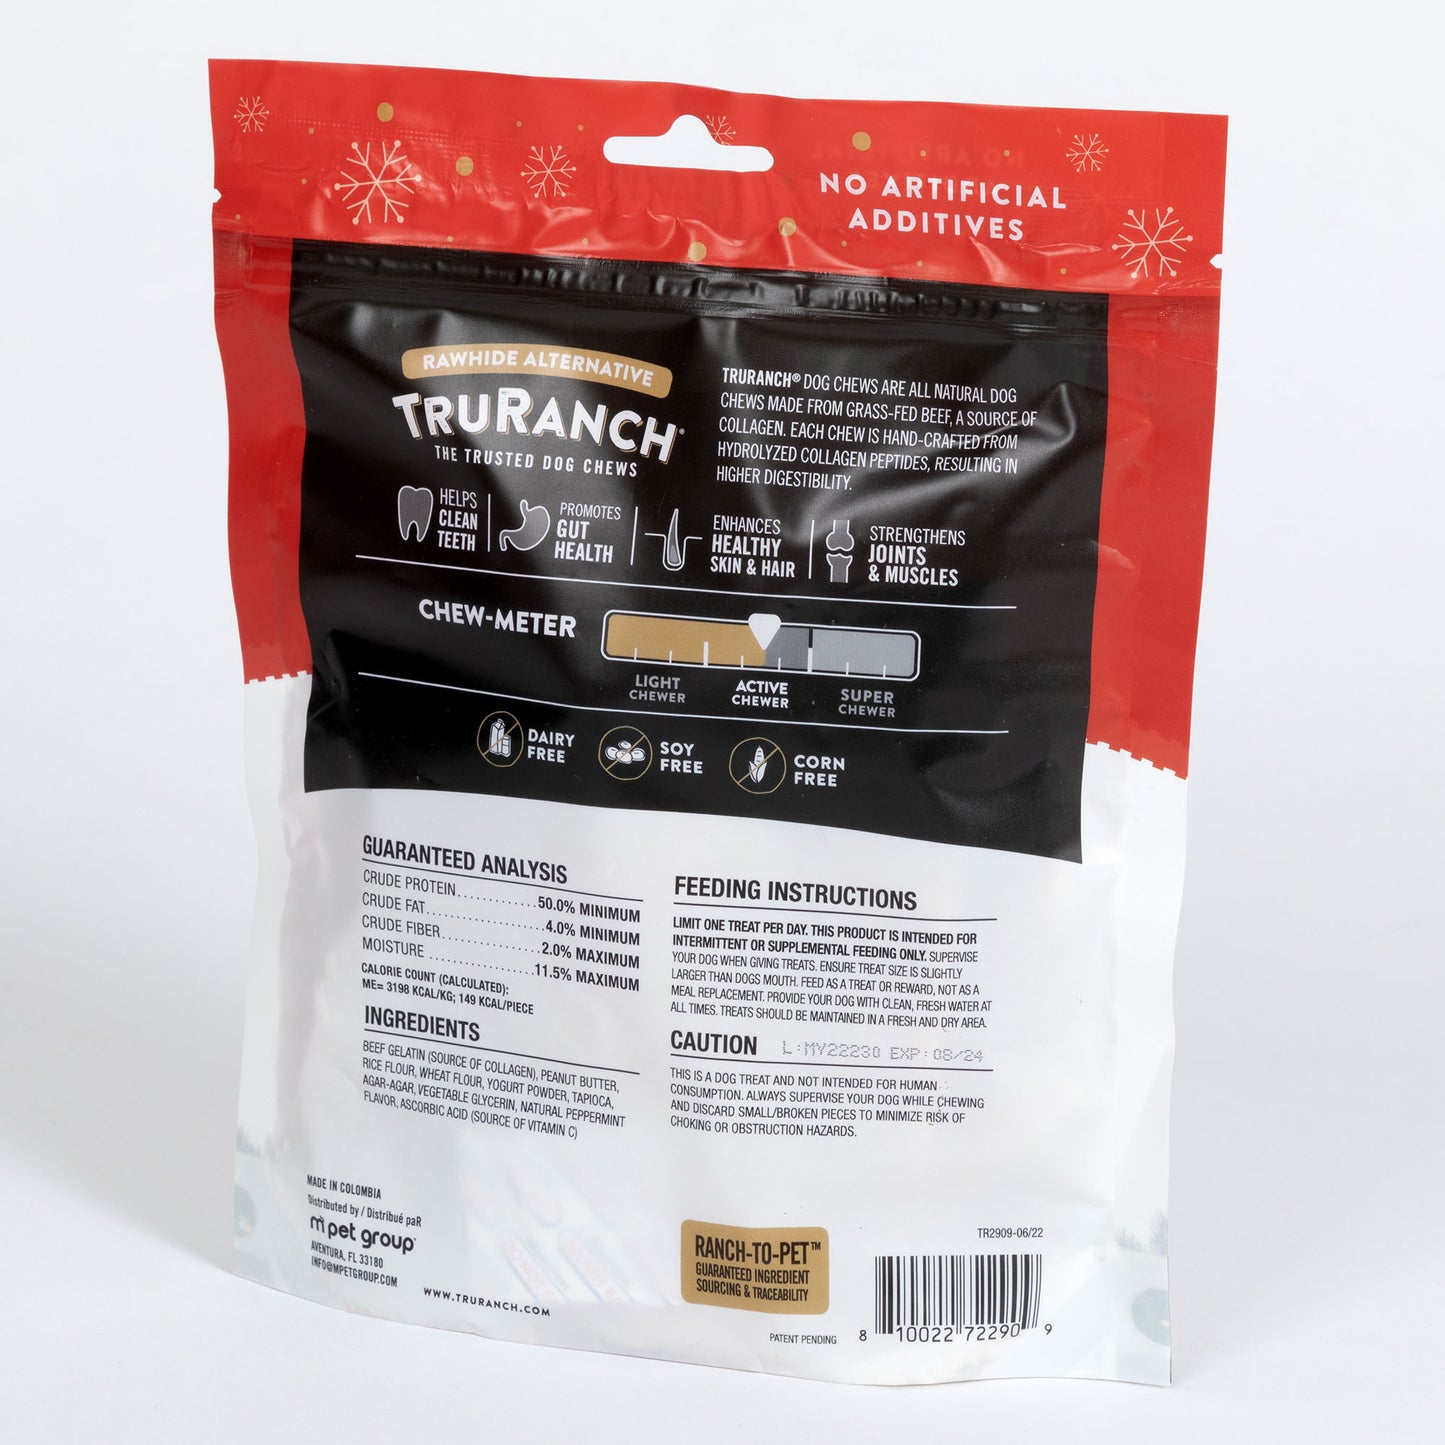 TruRanch&reg; Collagen Chips Peppermint Yogurt Dog Chews